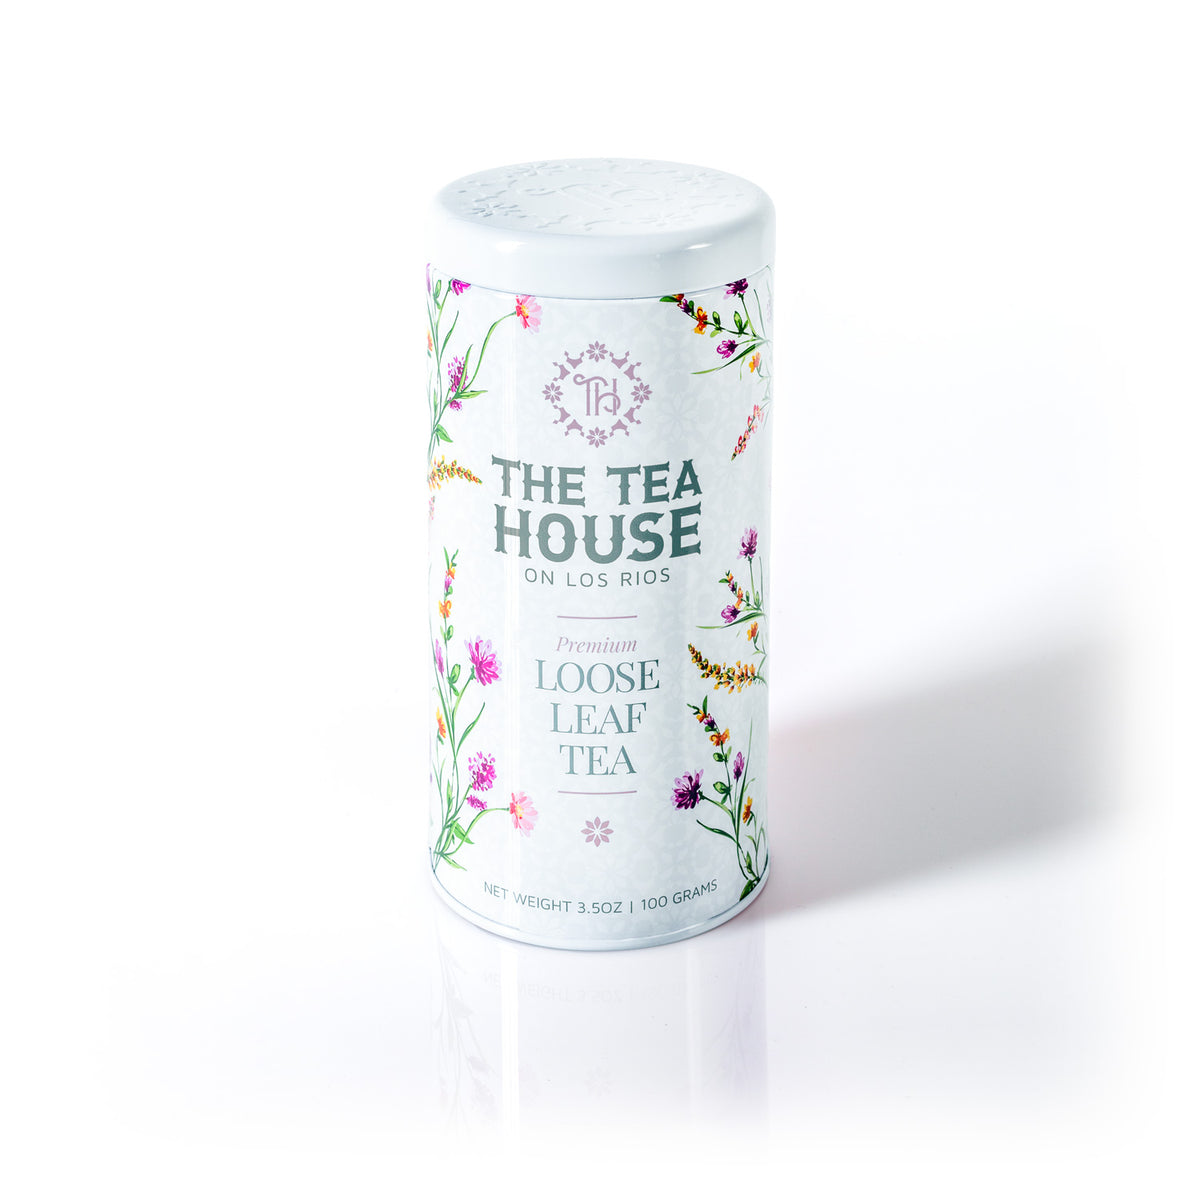 The Tea House on Los Rios unveils a NEW 100g Loose Leaf Tea Tin